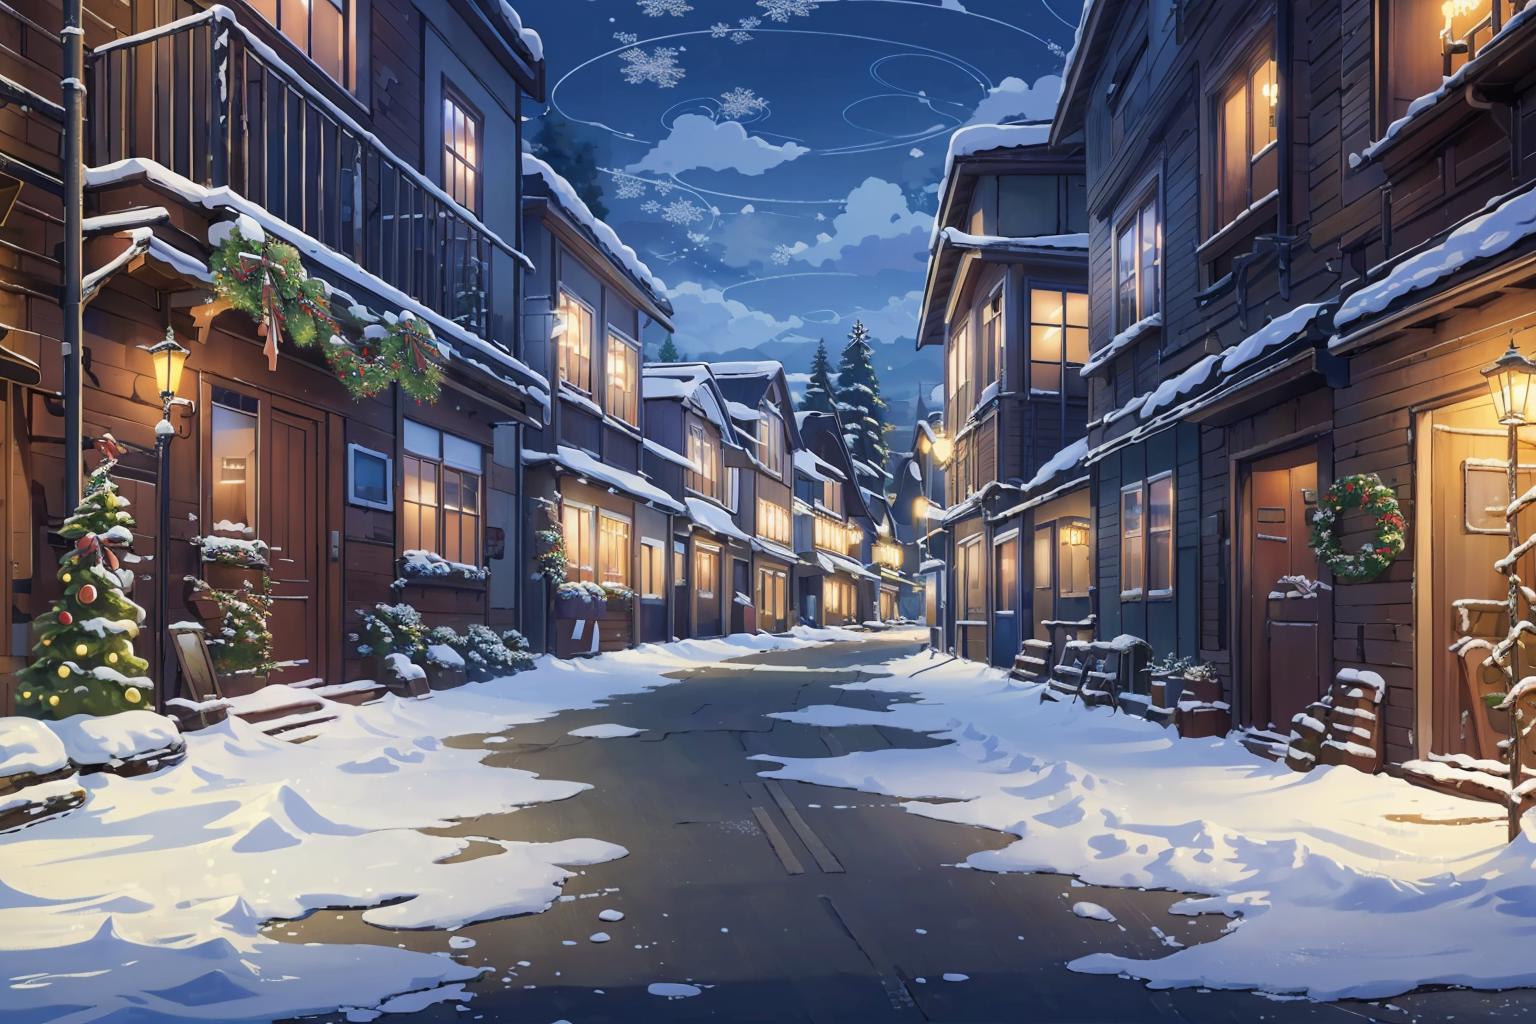 snowing : r/AnimeSketch